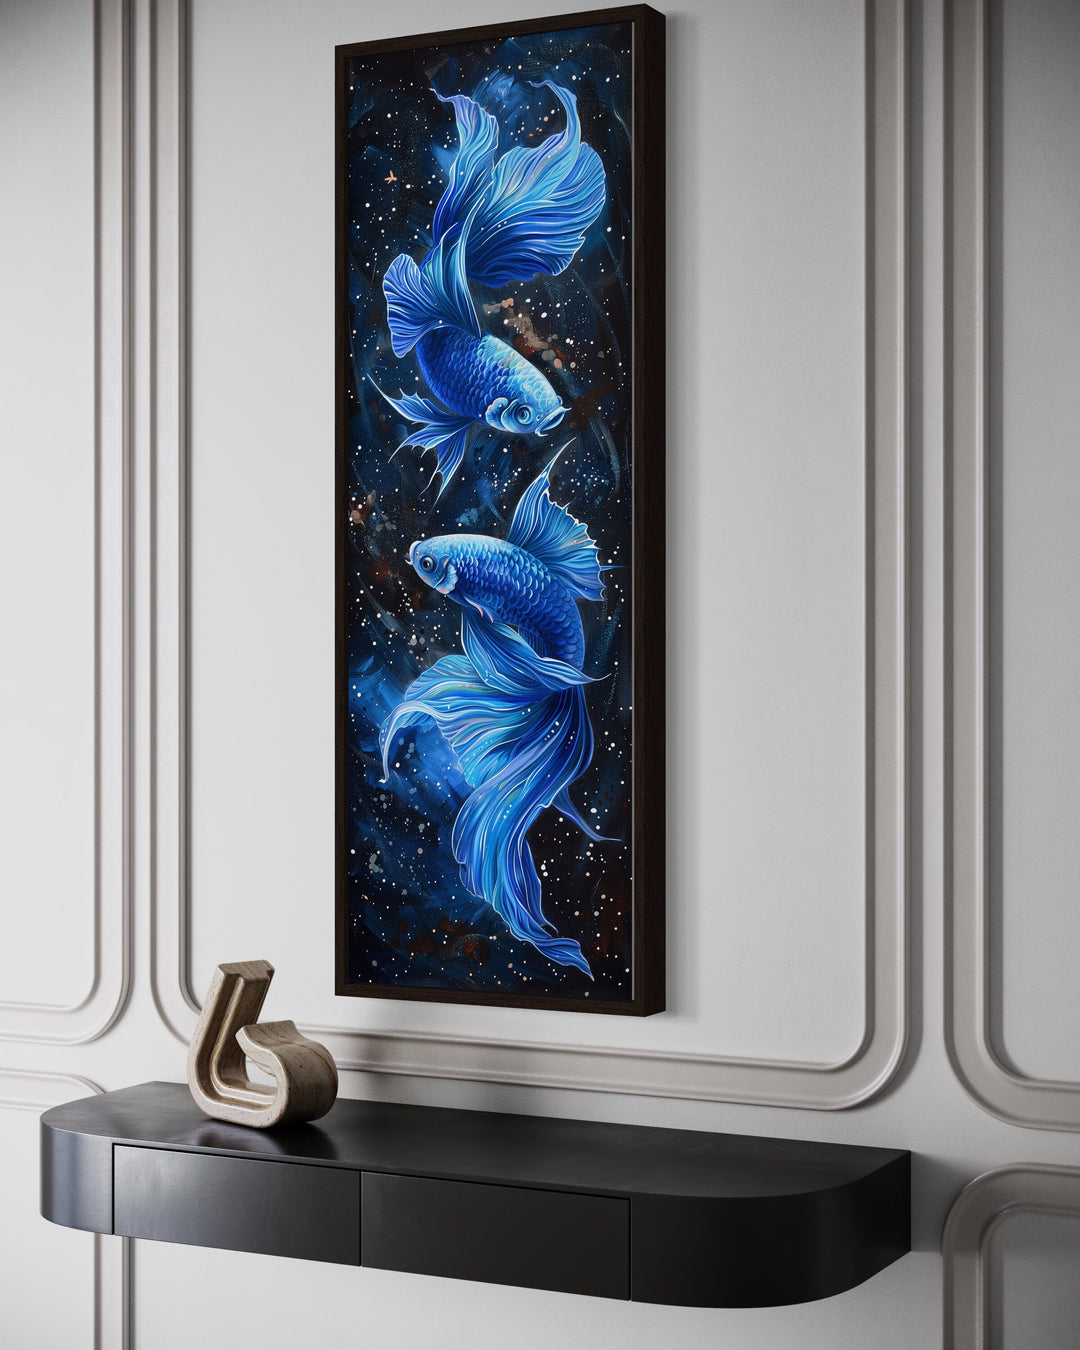 Tall Narrow Blue Betta Fish On Black Vertical Wall Art "Sapphire Swirl" close up side view